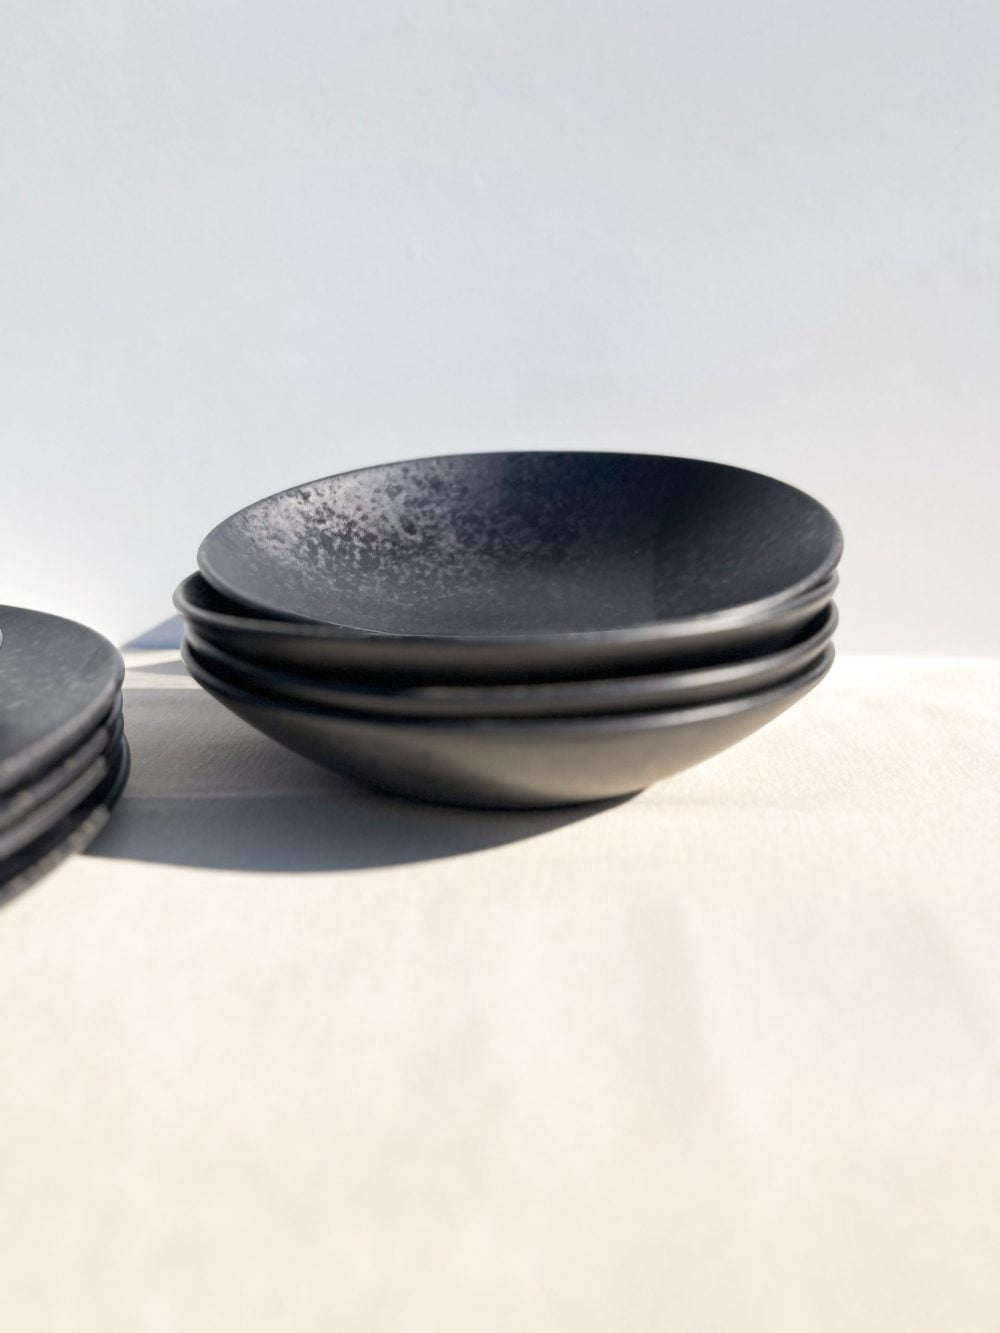 black pasta plates set - black stone -handmade ceramics - modern portuguese tableware at UNRO